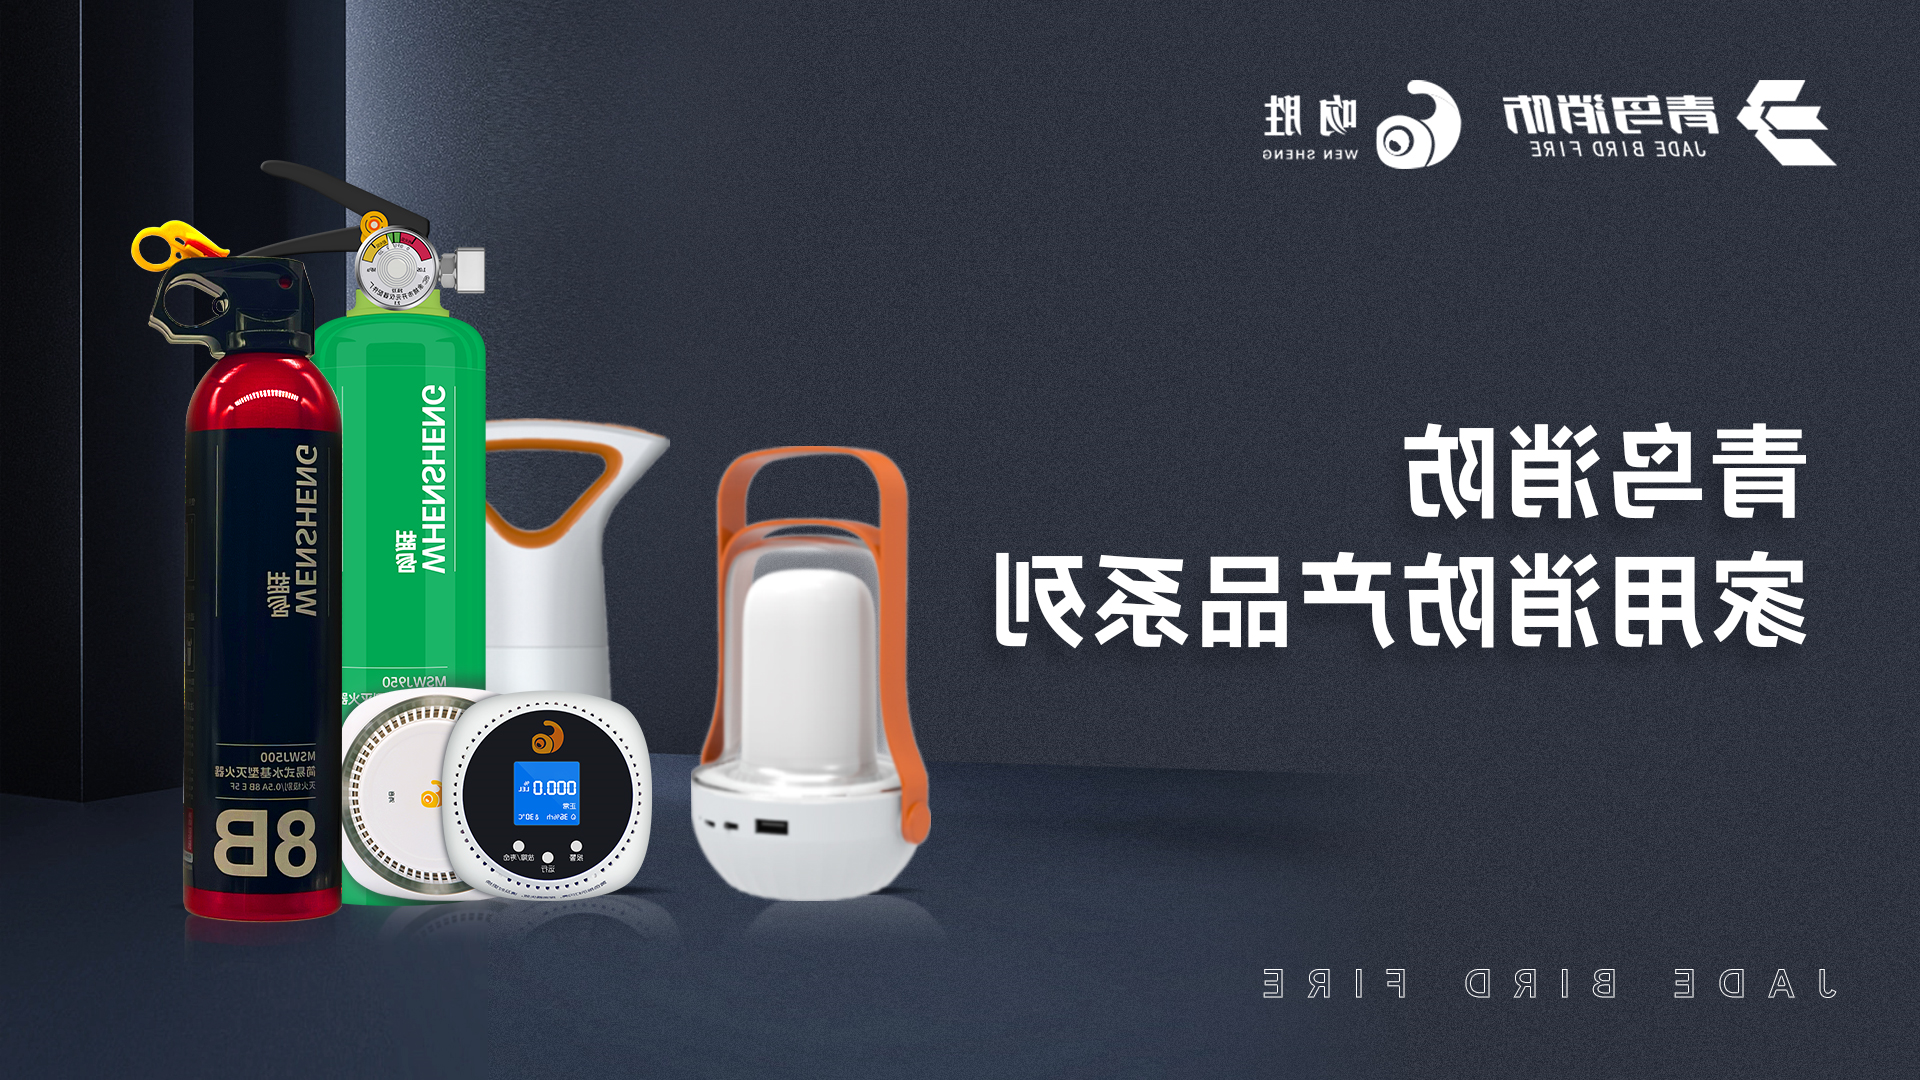 KOK体育（中国）官方网站在线下载
消防 — 家用消防产品系列解决方案